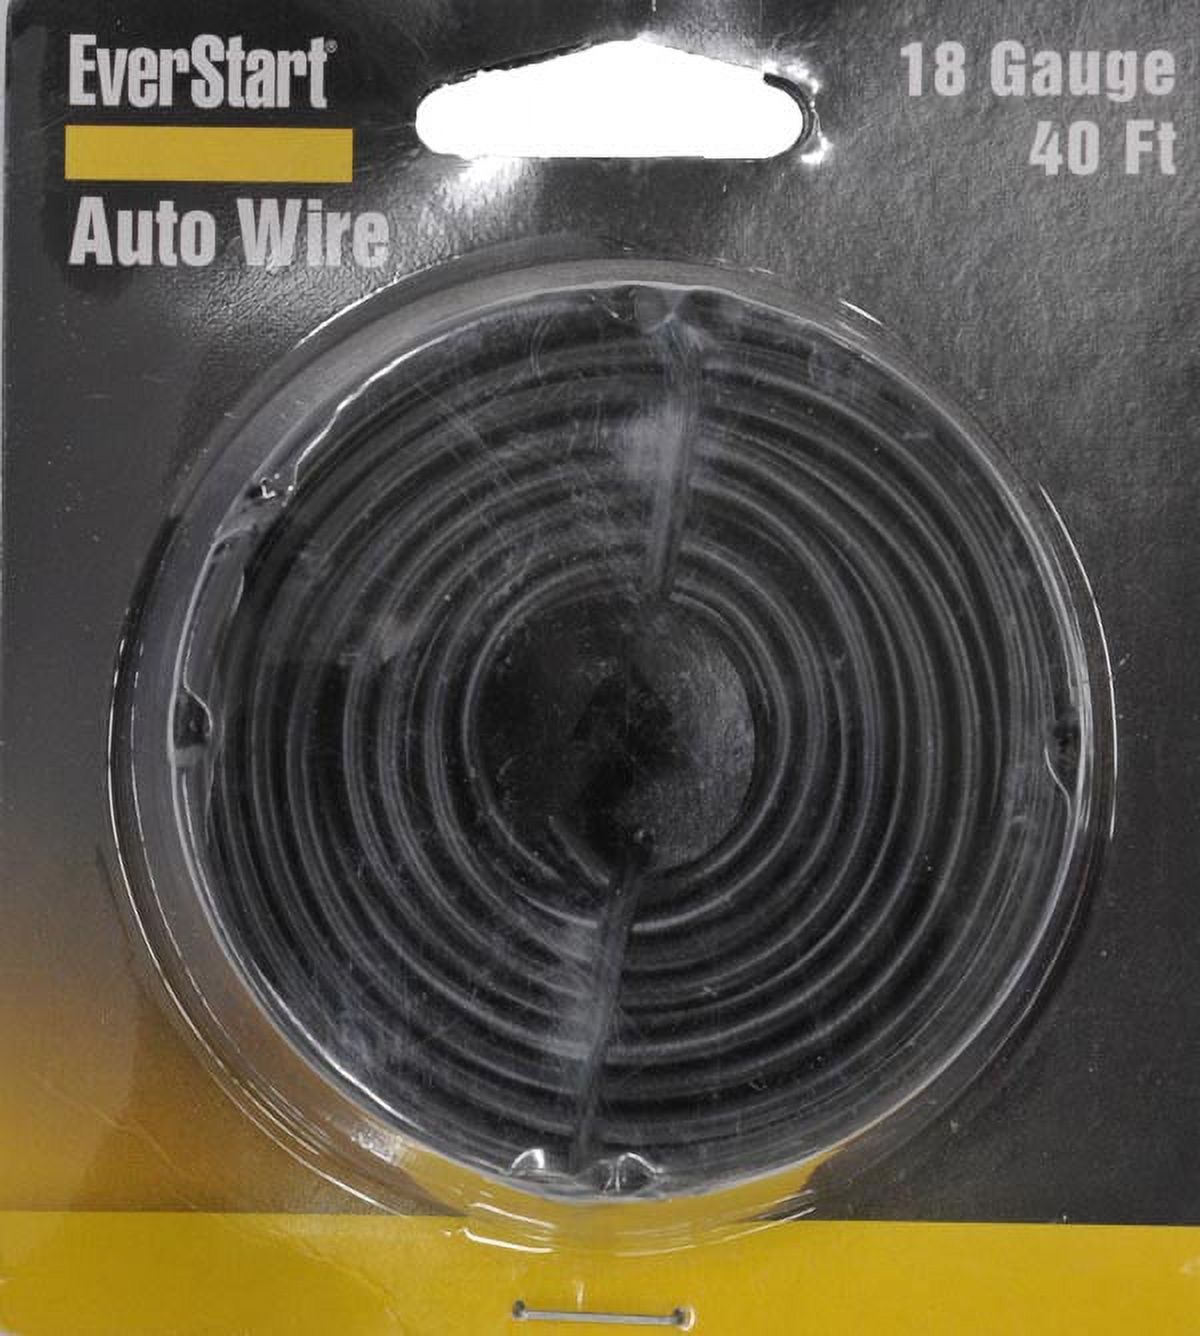 Everstart 51651-76-08 18-Gauge 40' Black Primary Automotive Wire - image 2 of 2